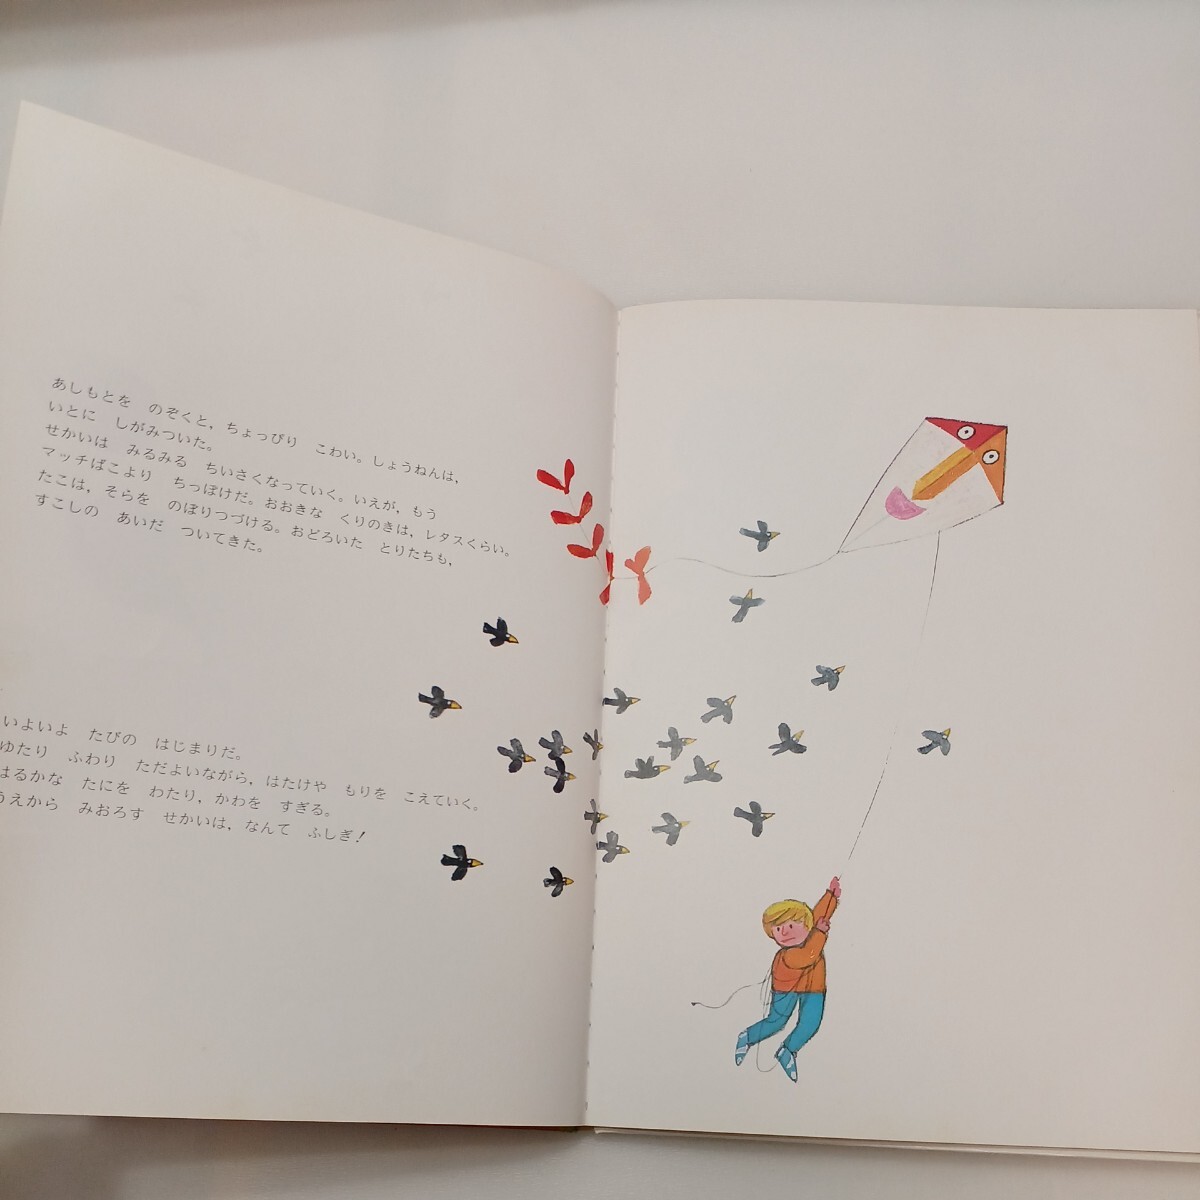 zaa-569♪たことしょうねん (1980年) マックス・ベルジュイス (著) 楠田枝里子 (訳) ほるぷ出版 (1980/12/1)